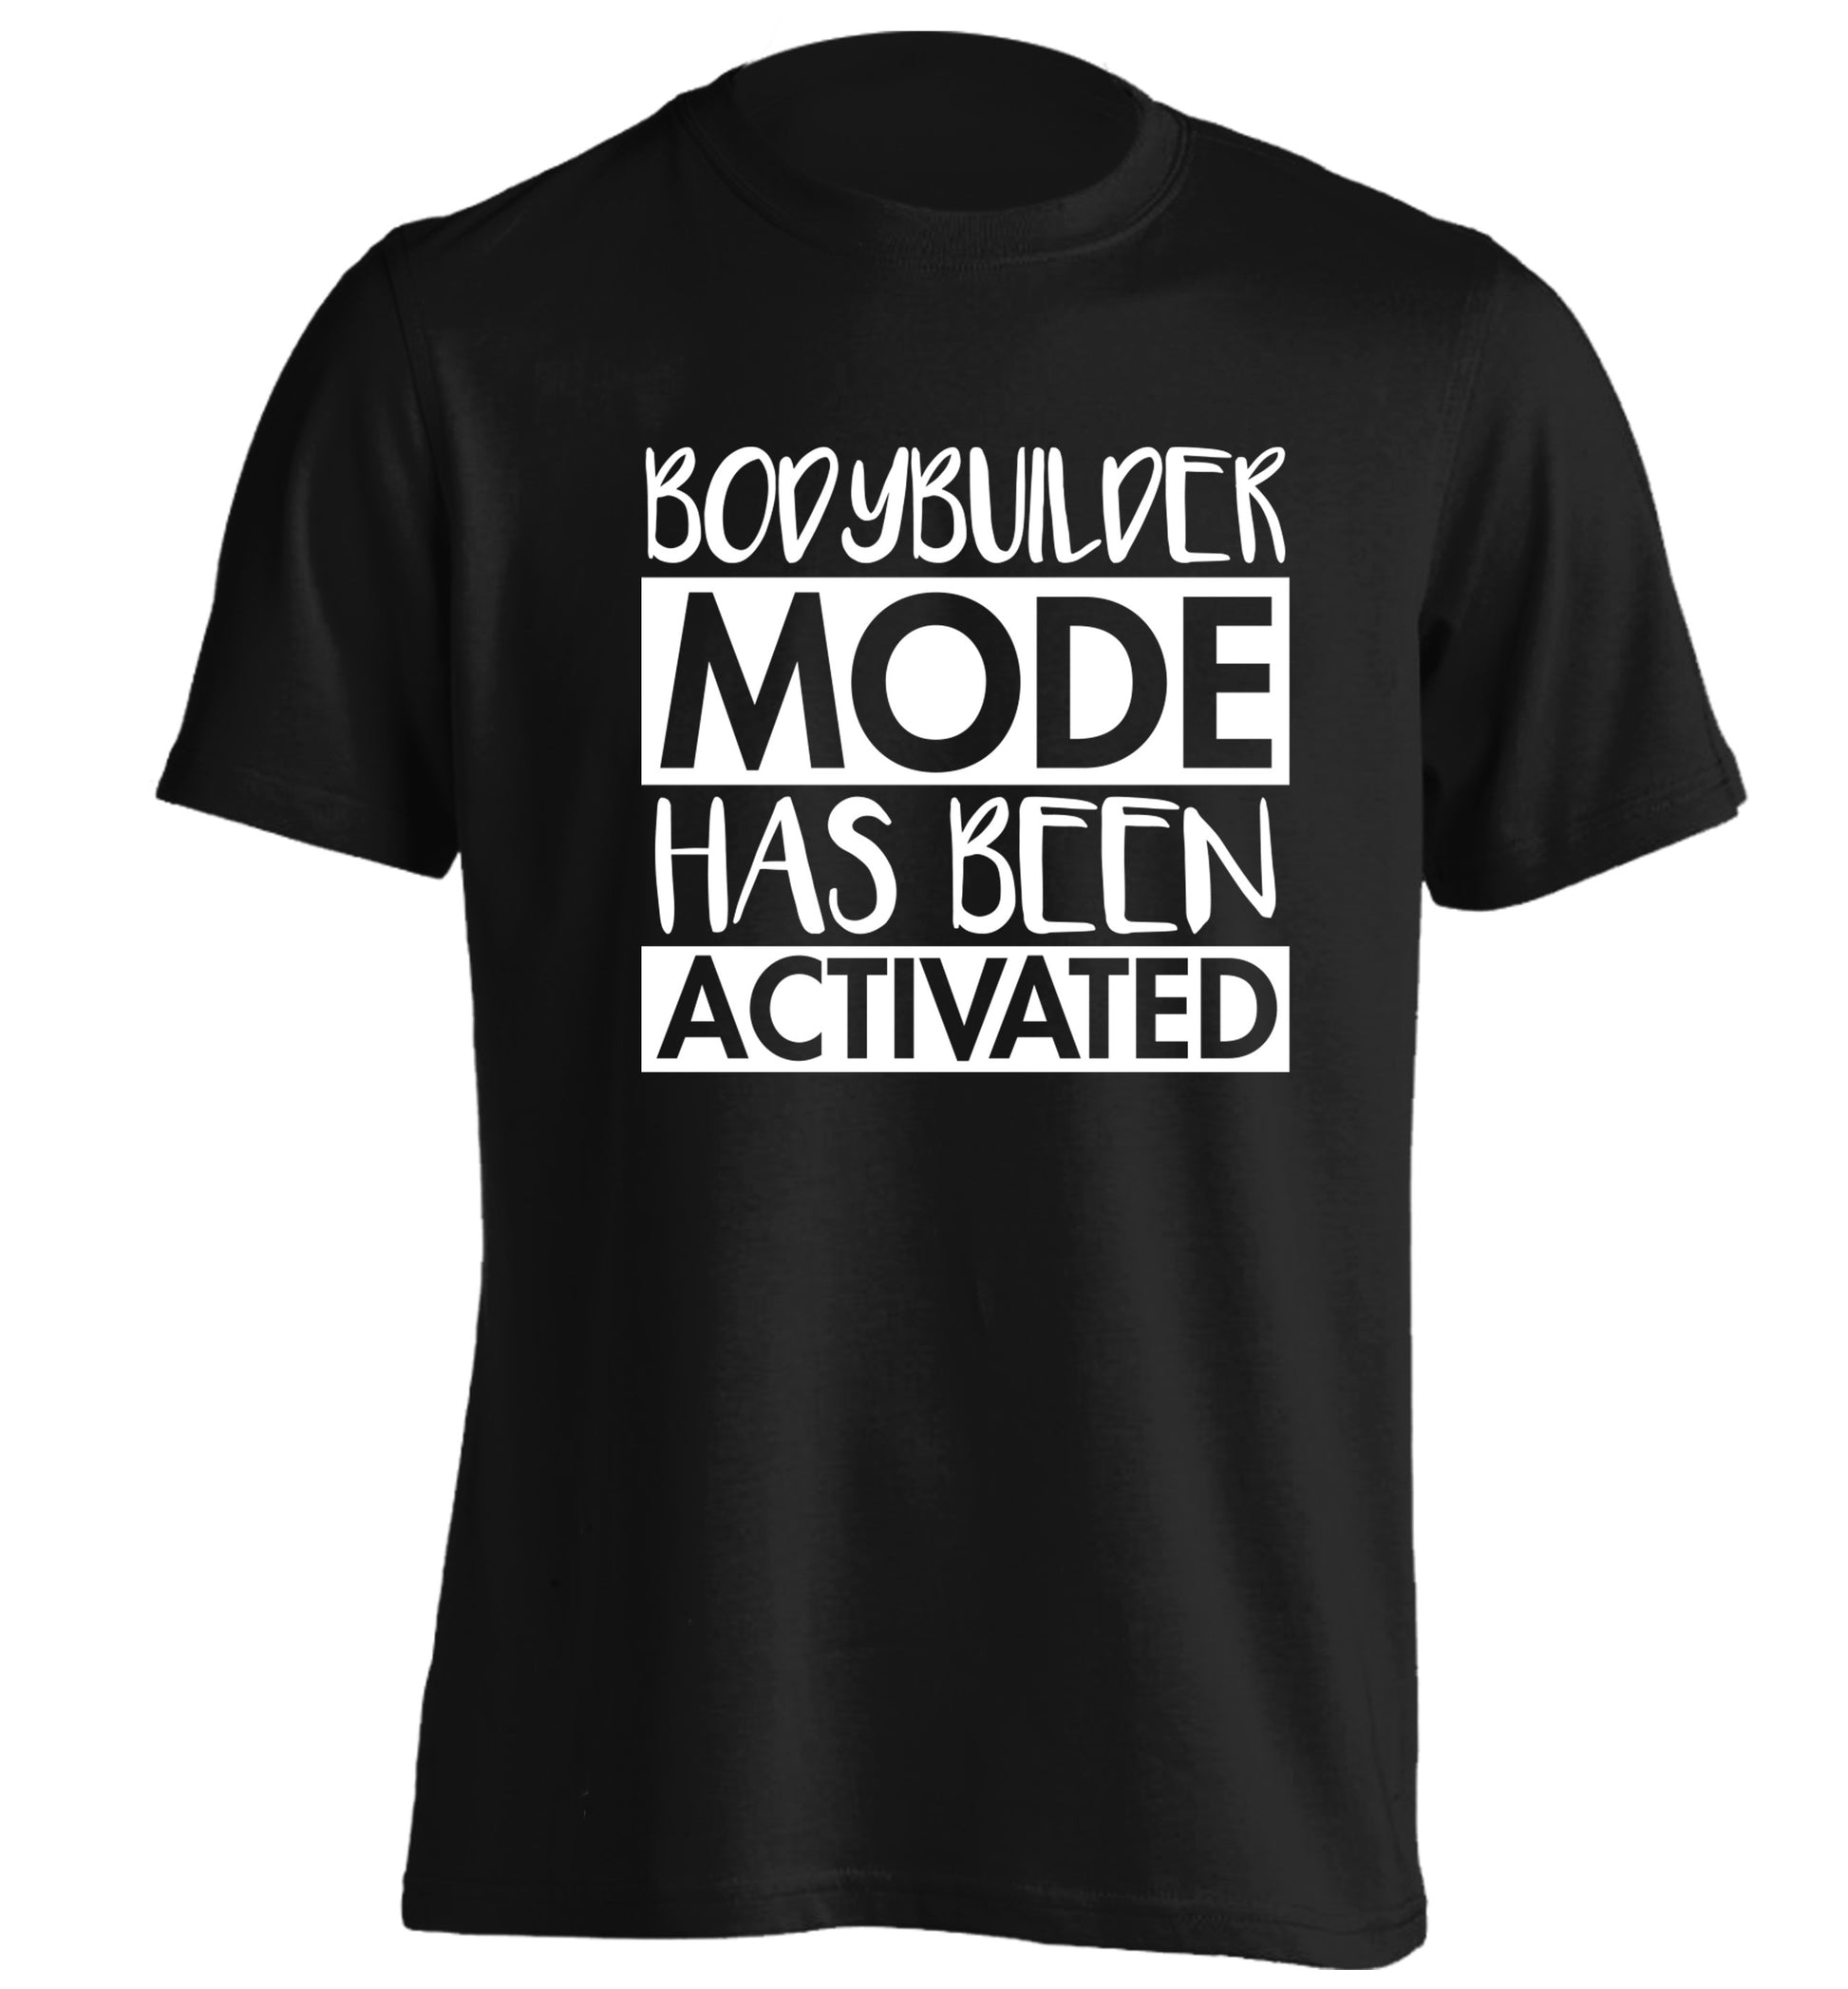 Bodybuilder mode activated adults unisex black Tshirt 2XL